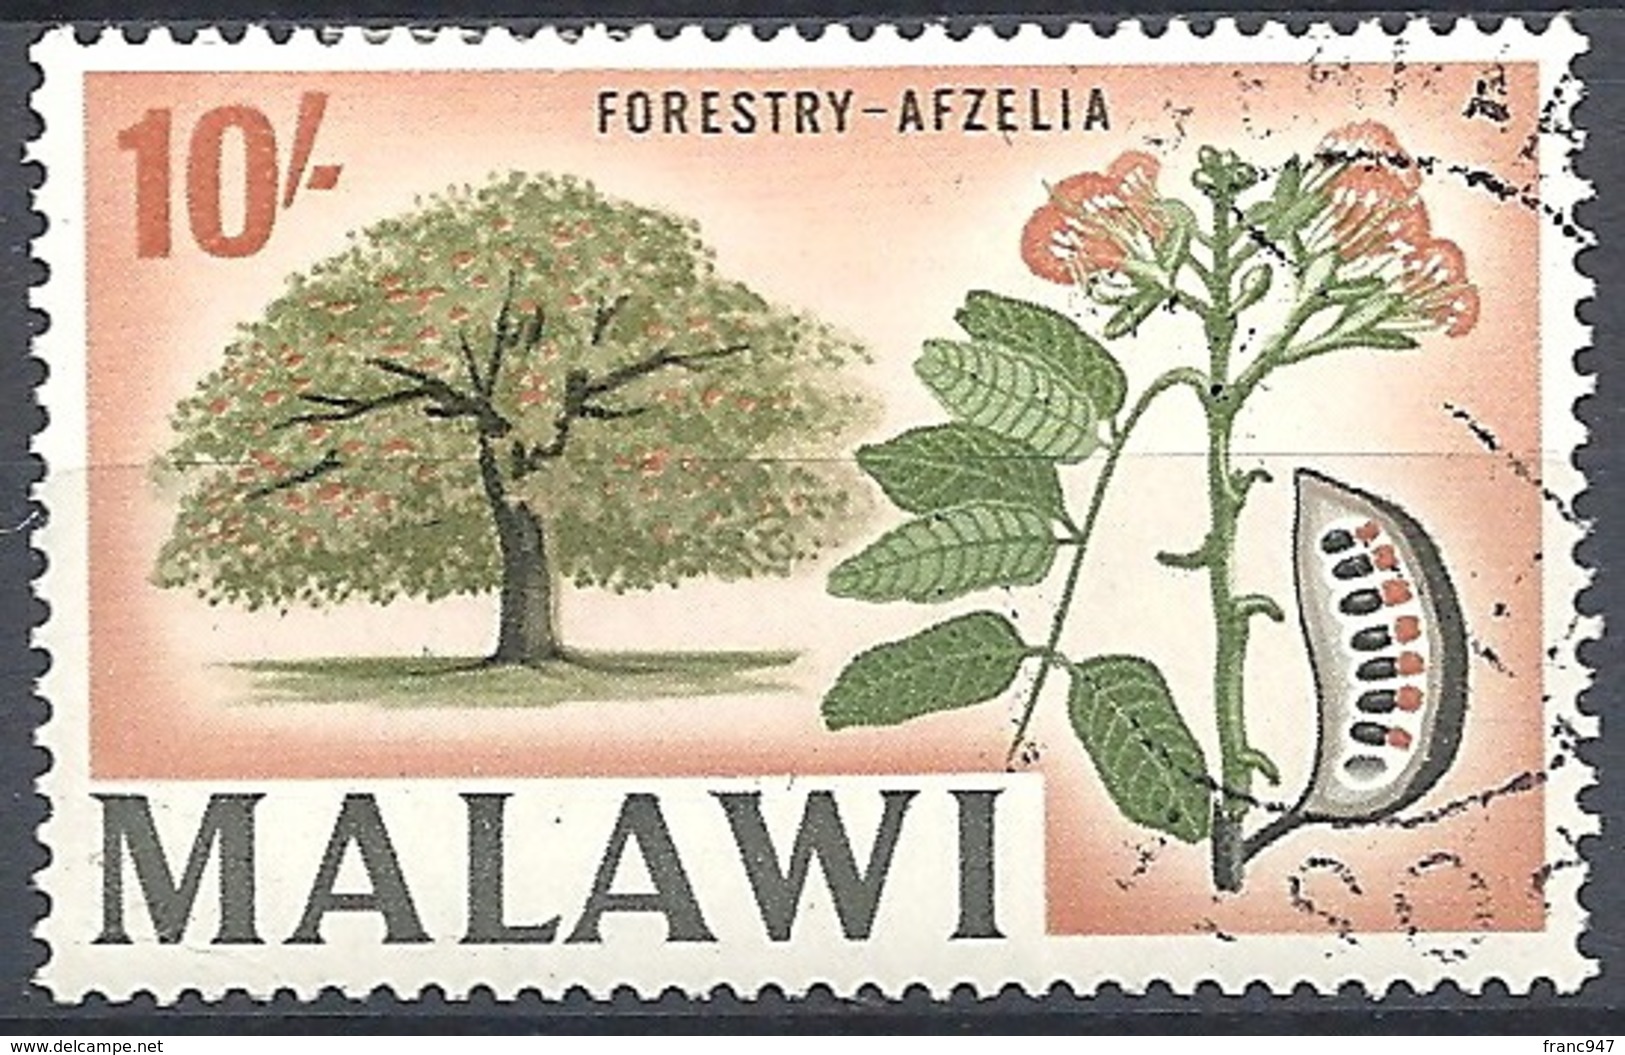 Malawi, 1964 Country Views- Forestry - Afzelia, 10sh  Multicol  # S.G. 226 - Michel 13 - Scott 16  USED - Malawi (1964-...)